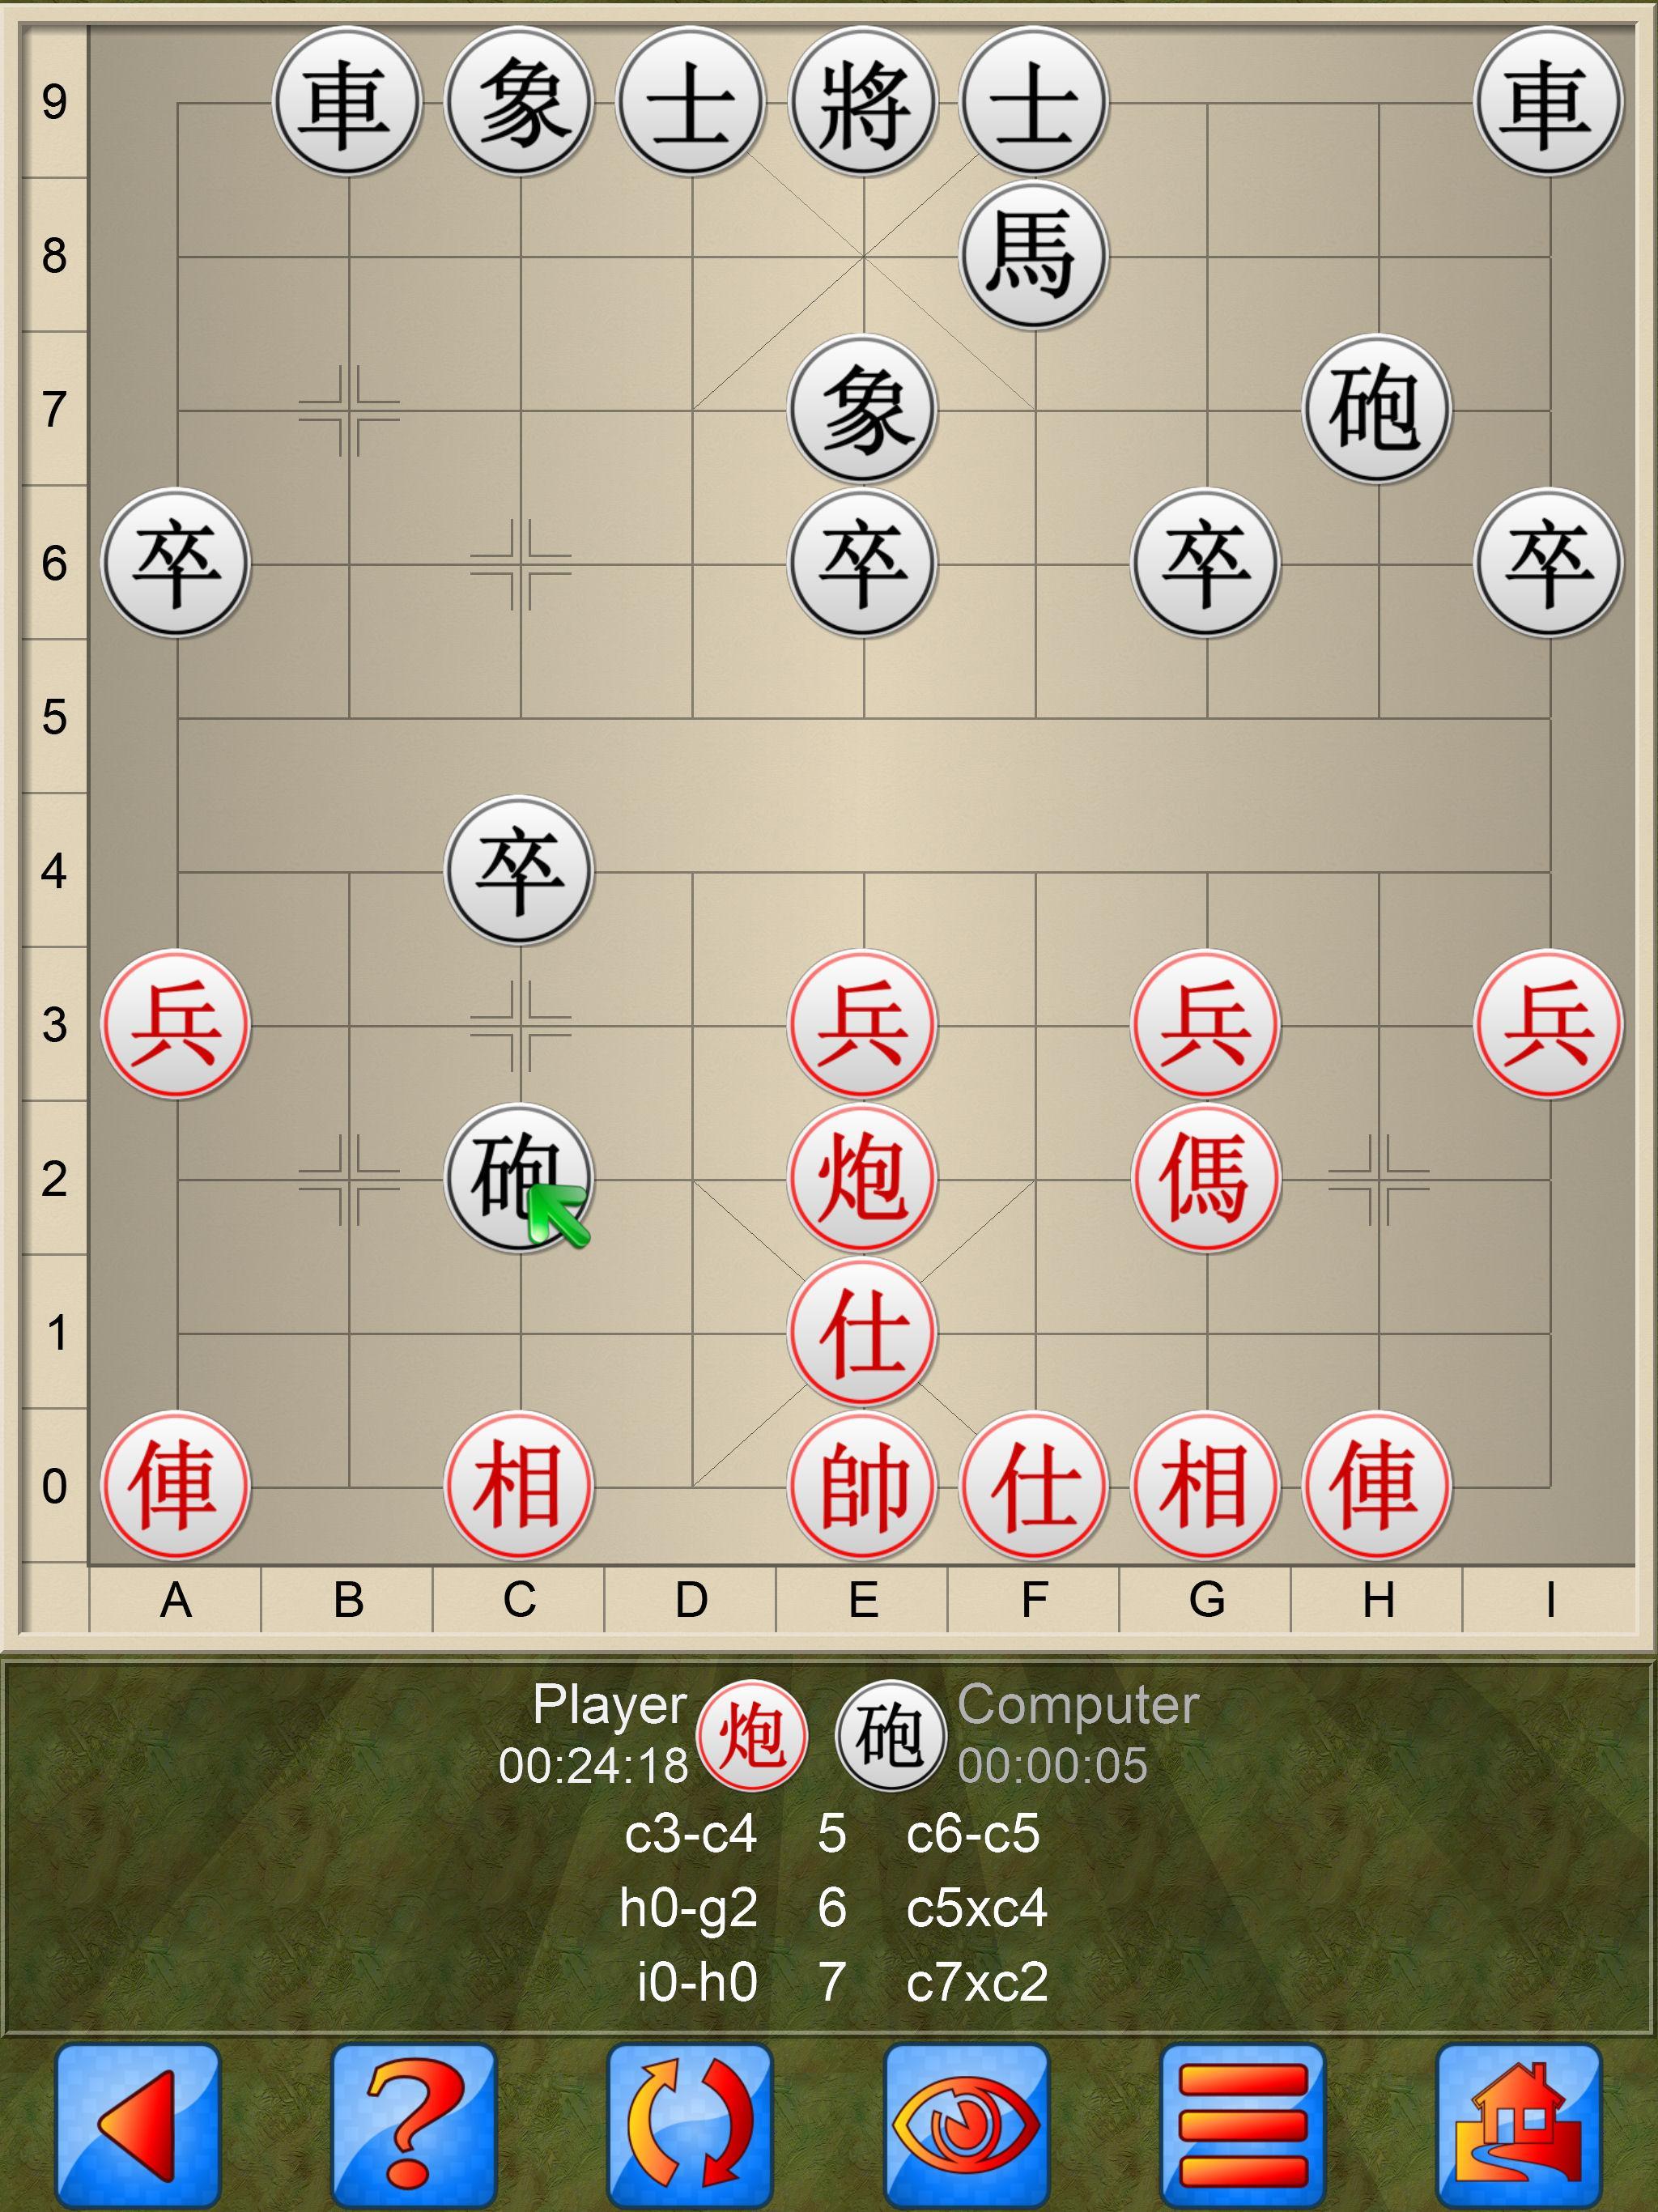 Chinese Chess V+, multiplayer Xiangqi board game 5.25.65 Screenshot 8